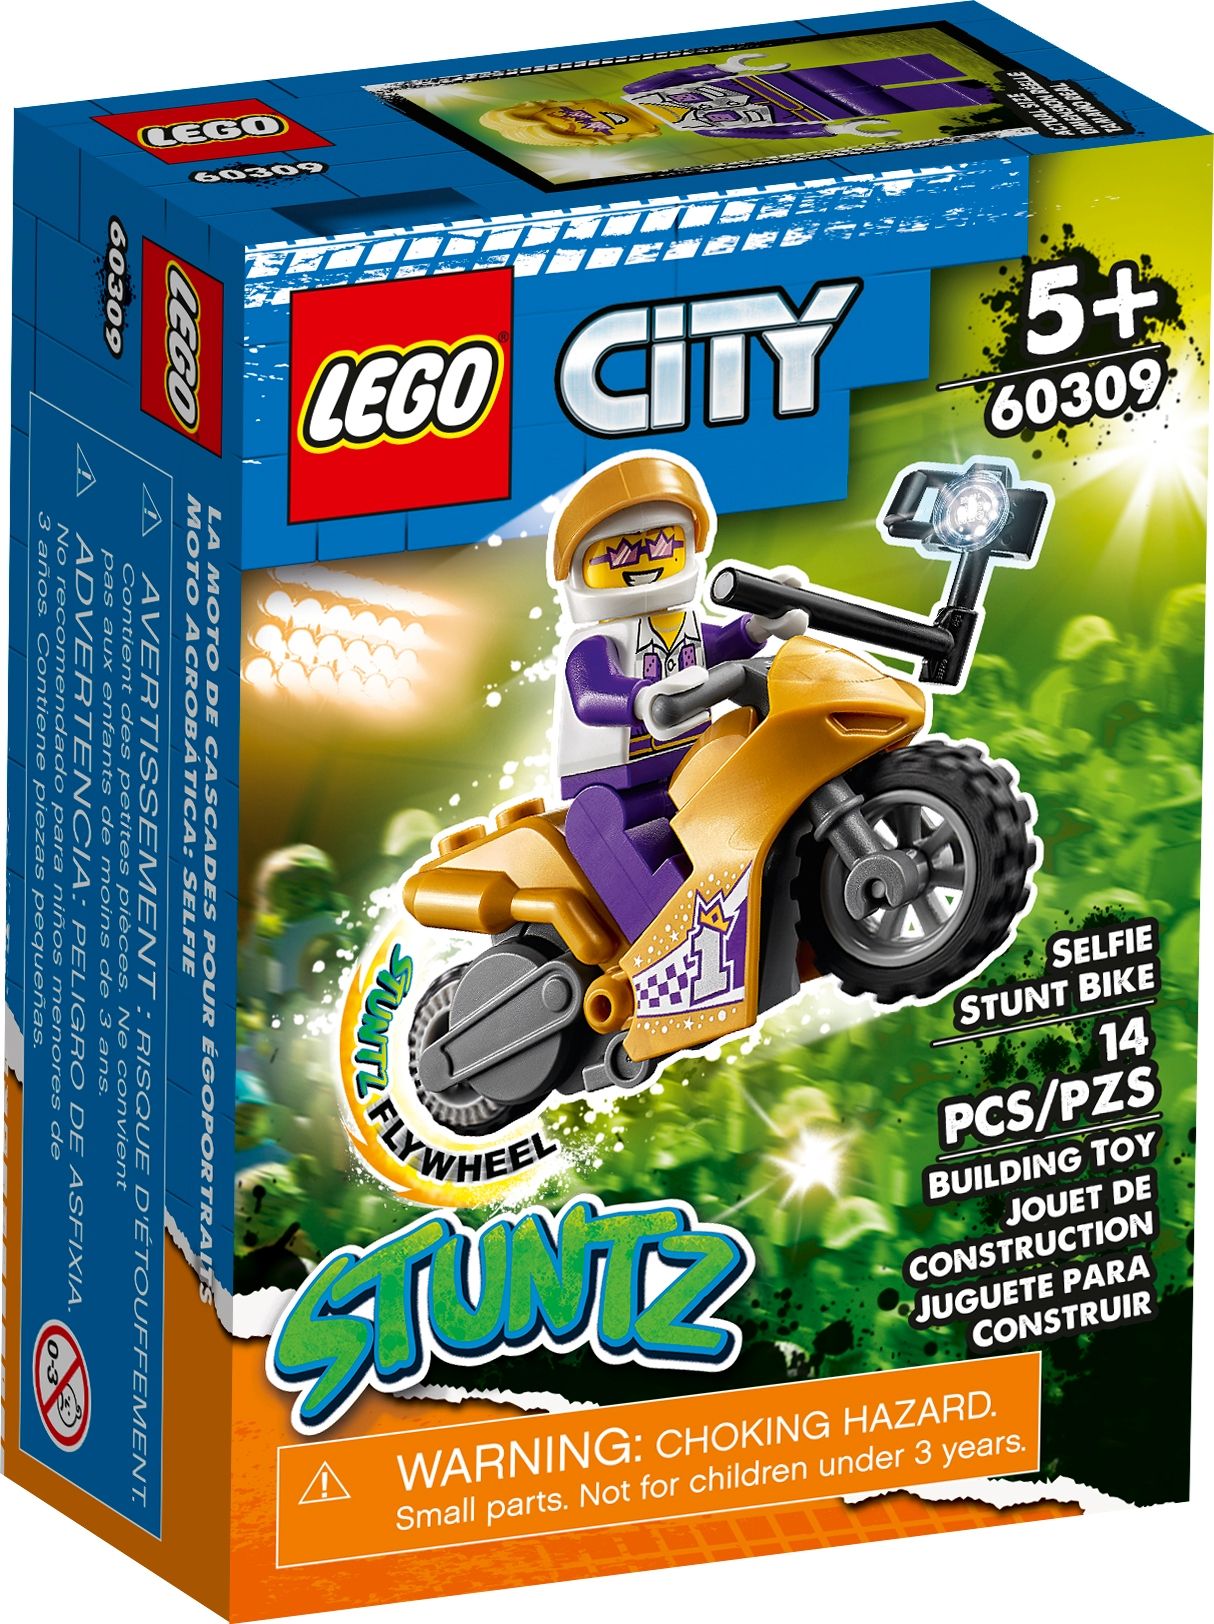 LEGO City 60309 Selfie-Stuntbike LEGO_60309_alt1.jpg